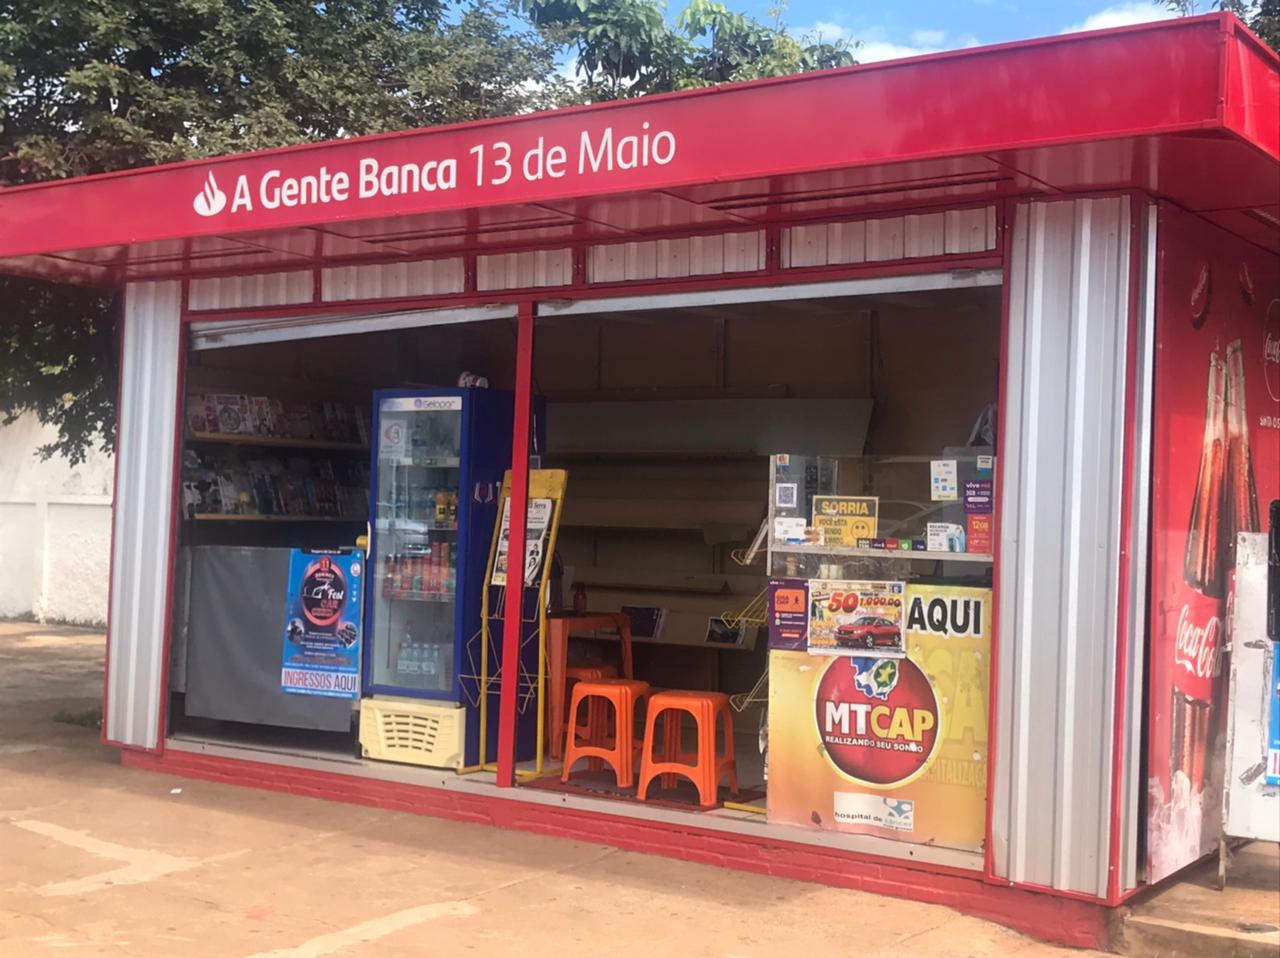 BANCA 13 DE MAIO - Bancas de Jornais e Revistas - Tangará da Serra, MT